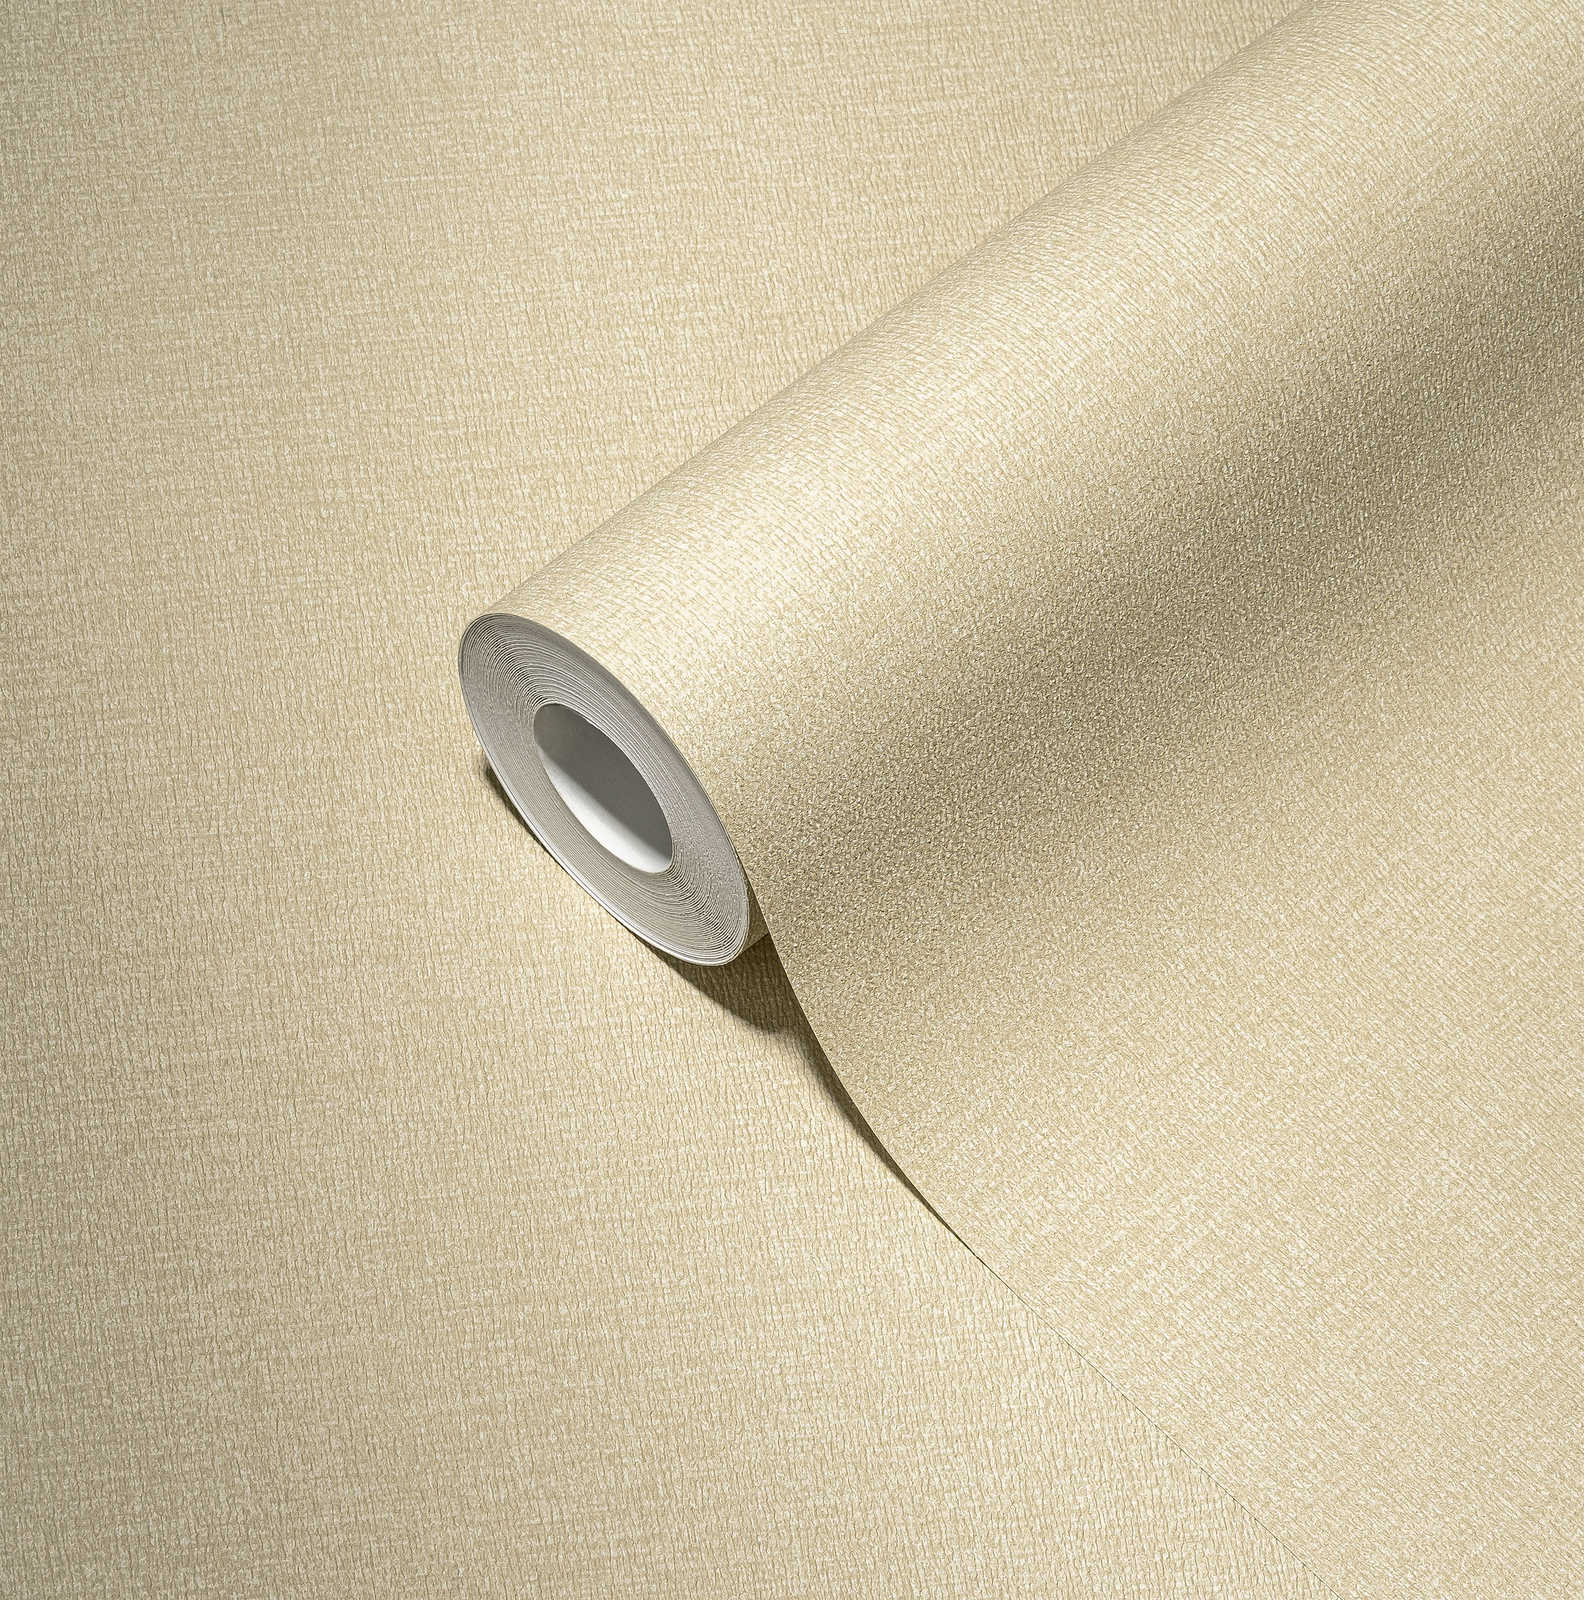             Lightly textured plain wallpaper in a warm shade - beige
        